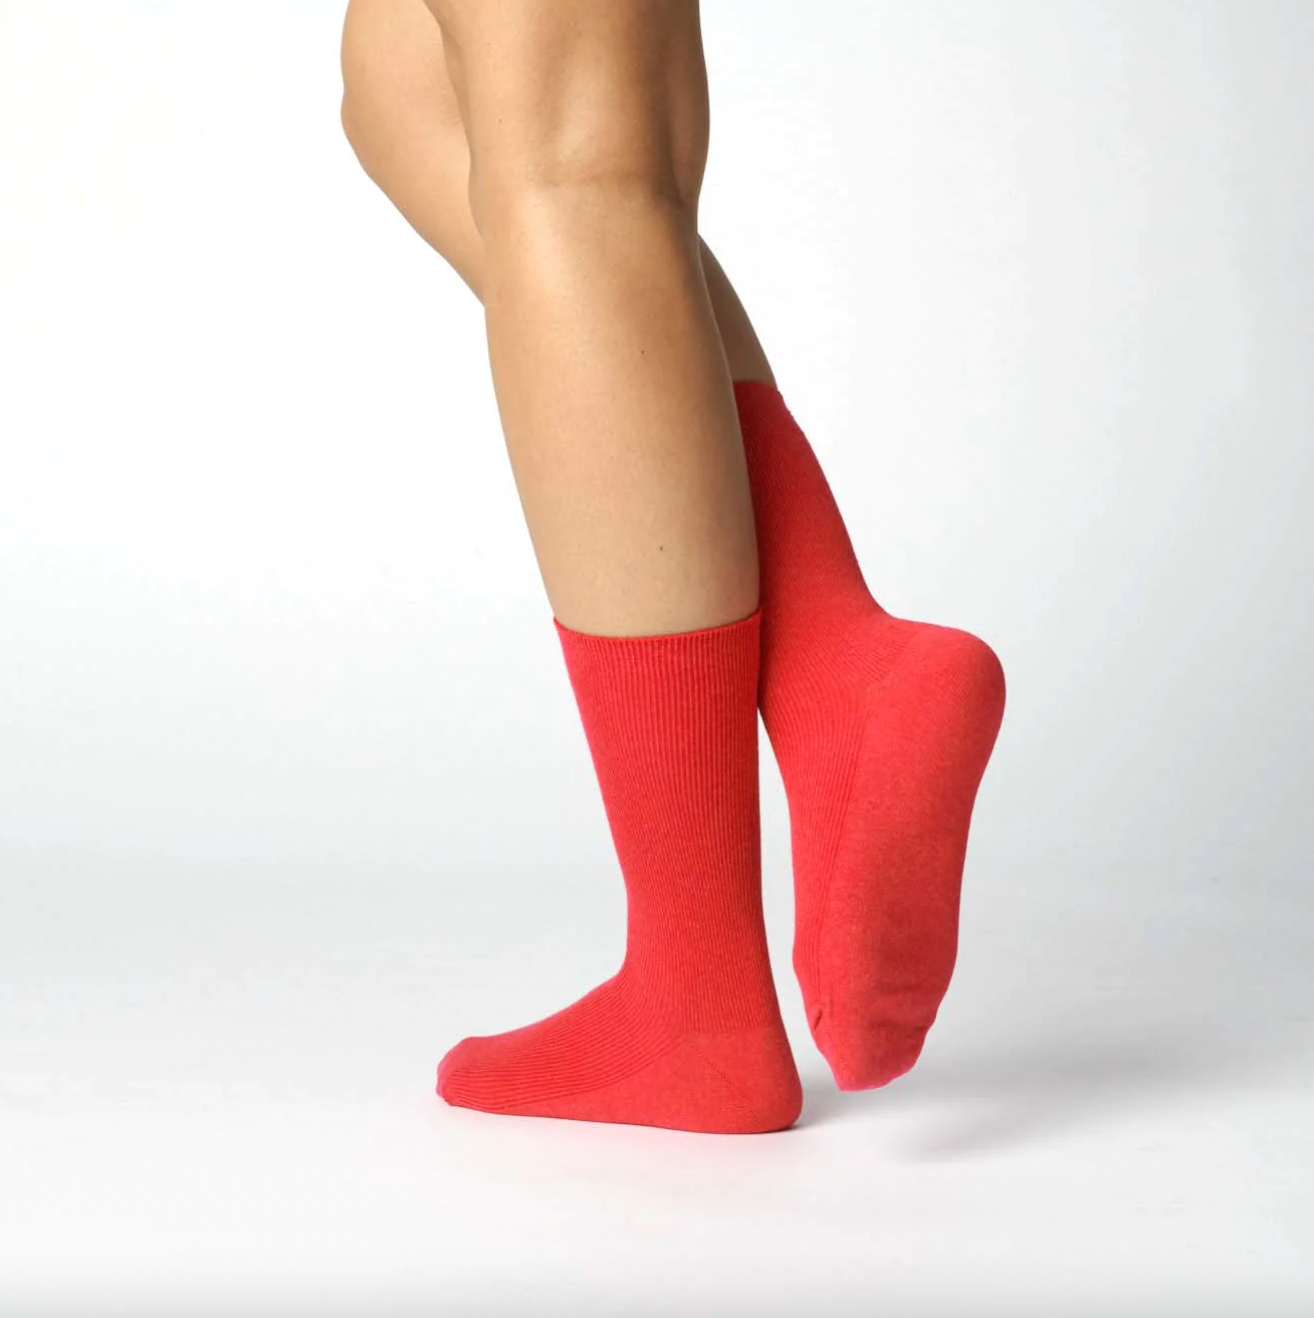 Hooray Sock Co - Everyday Cotton Socks in Scarlet